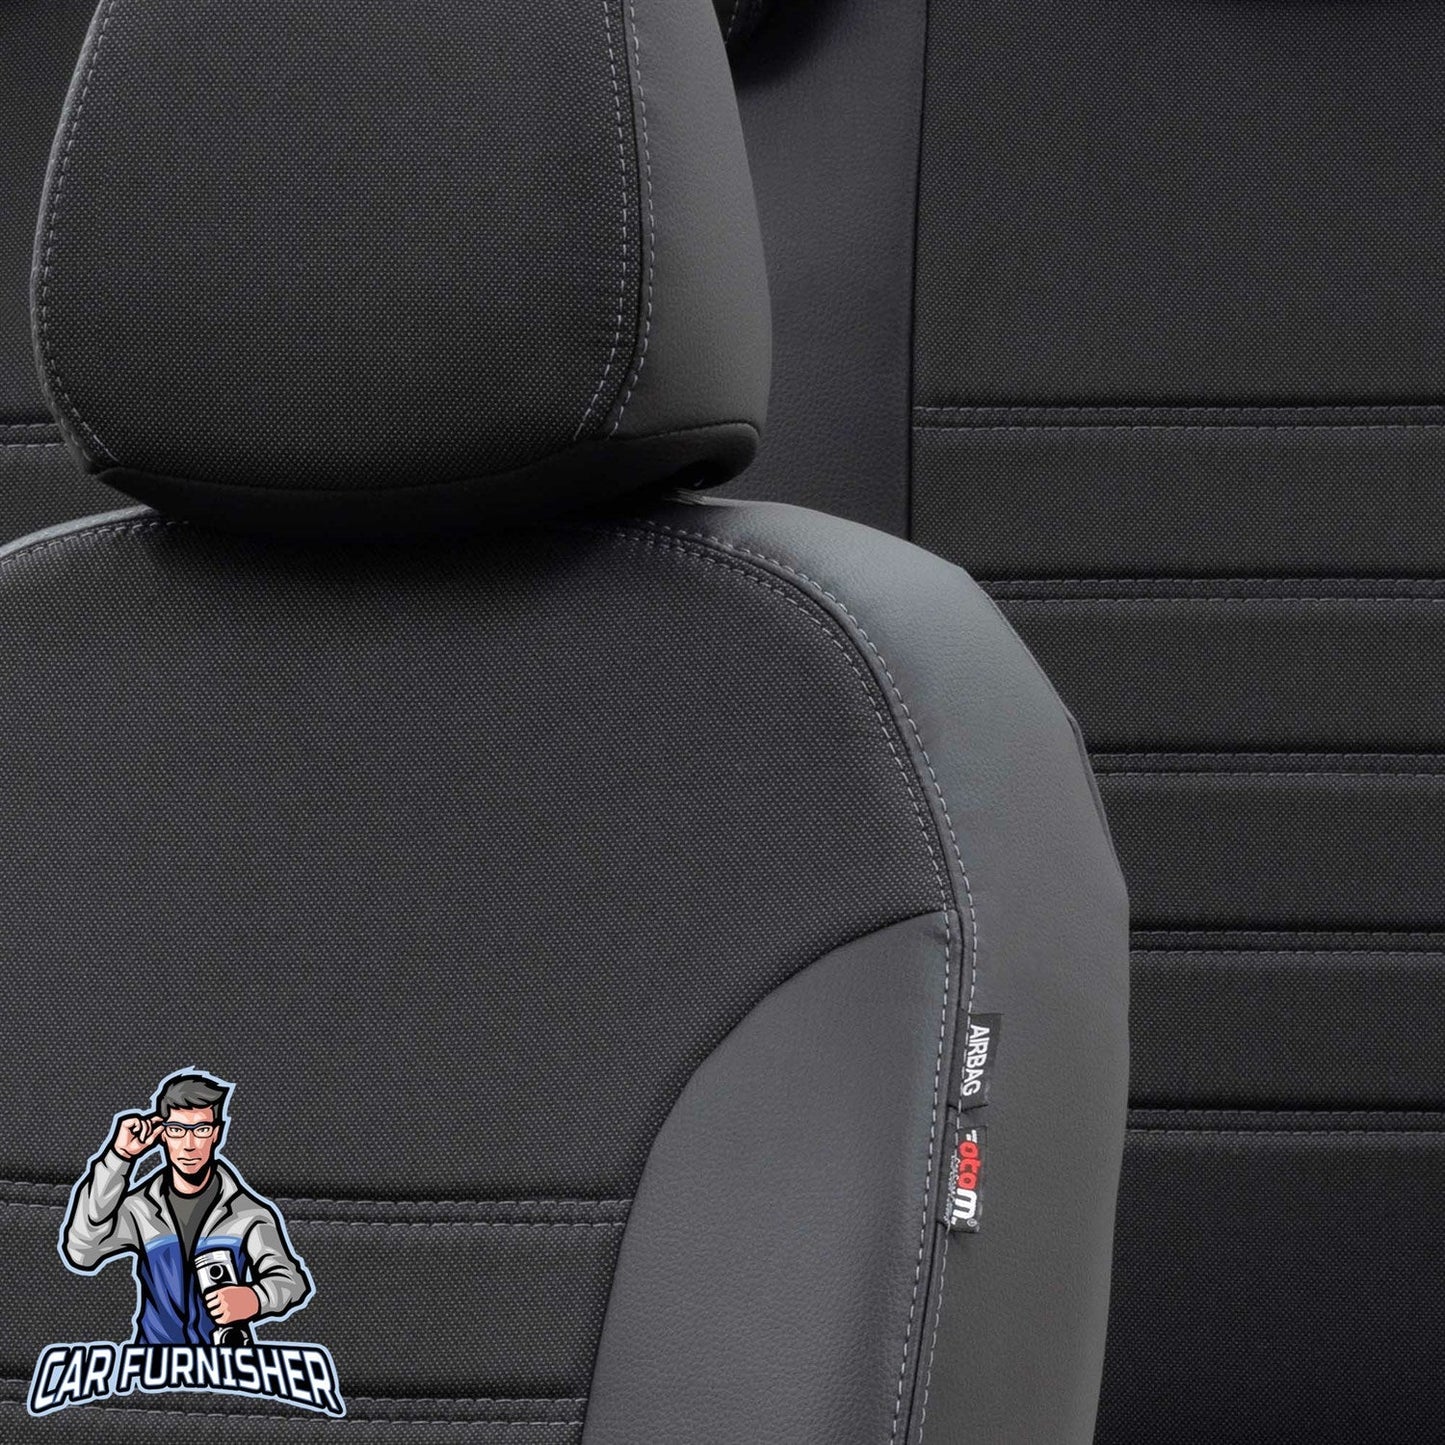 Nissan Qashqai Seat Covers Paris Leather & Jacquard Design Black Leather & Jacquard Fabric